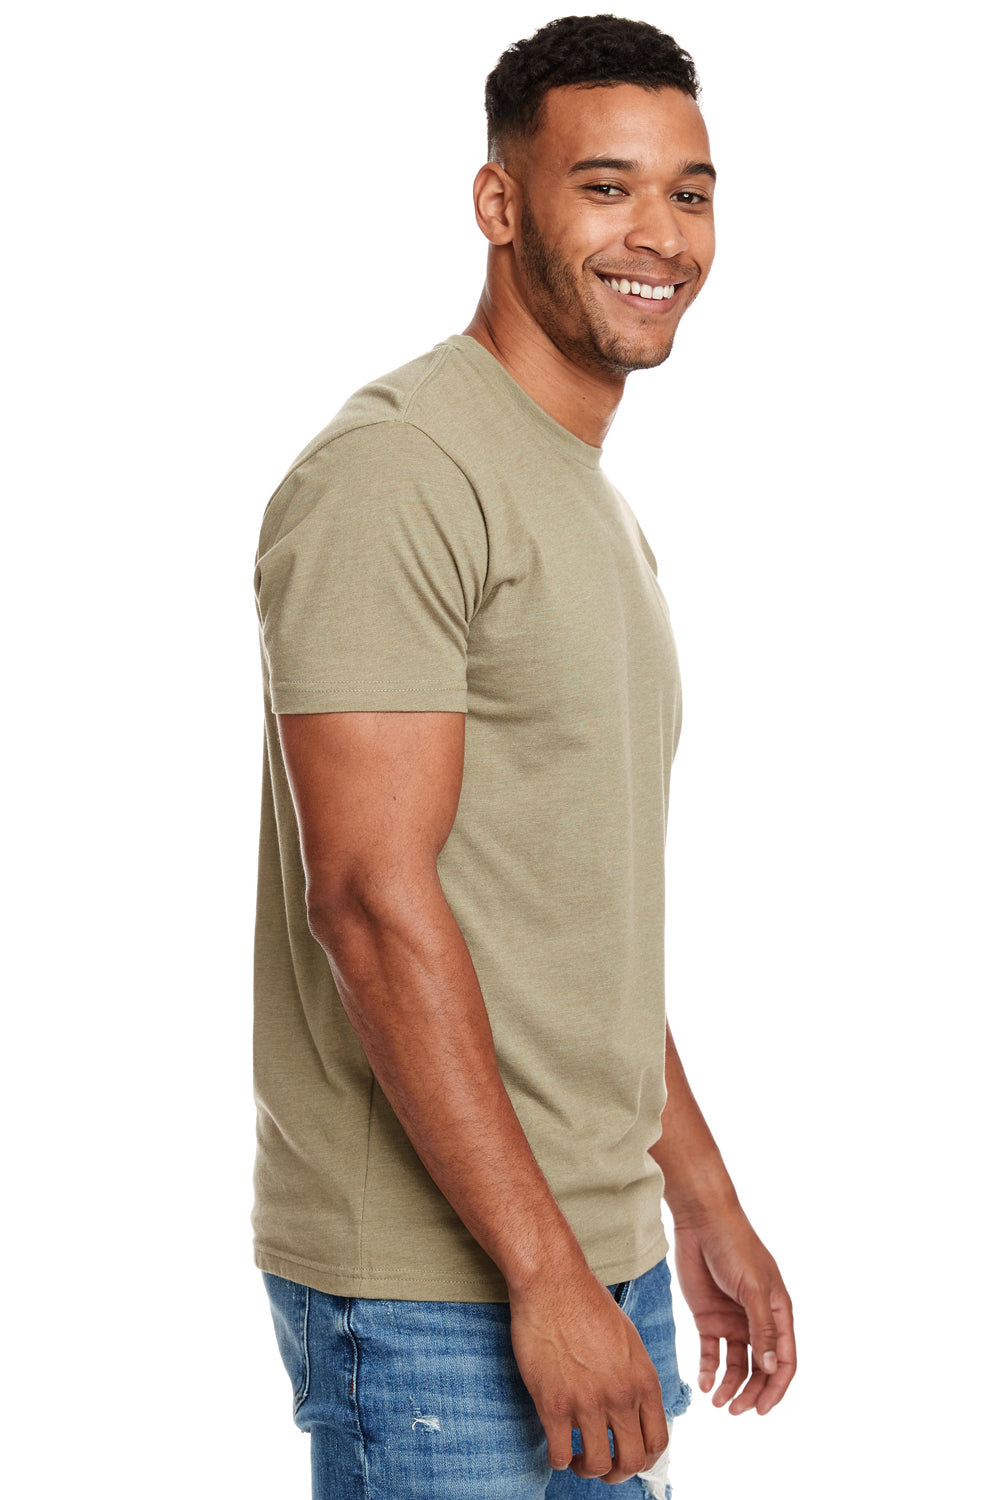 Next Level N6210 Mens CVC Jersey Short Sleeve Crewneck T-Shirt Light Olive Green Side